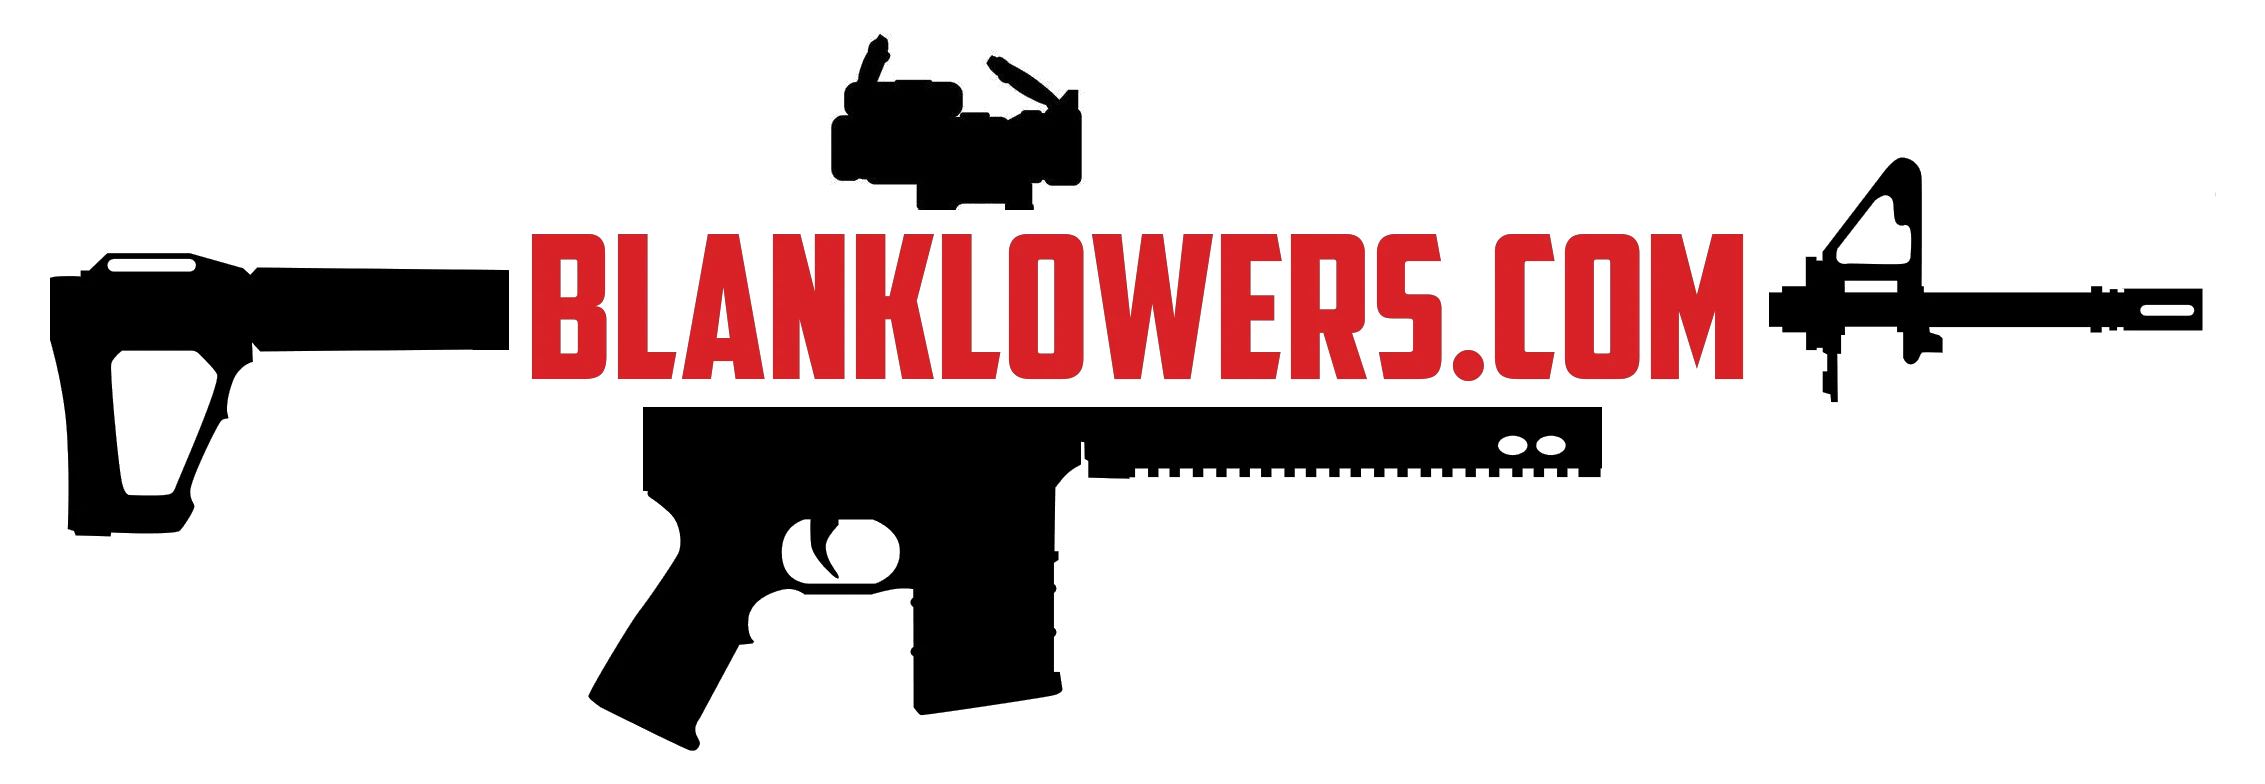 blanklowers.com